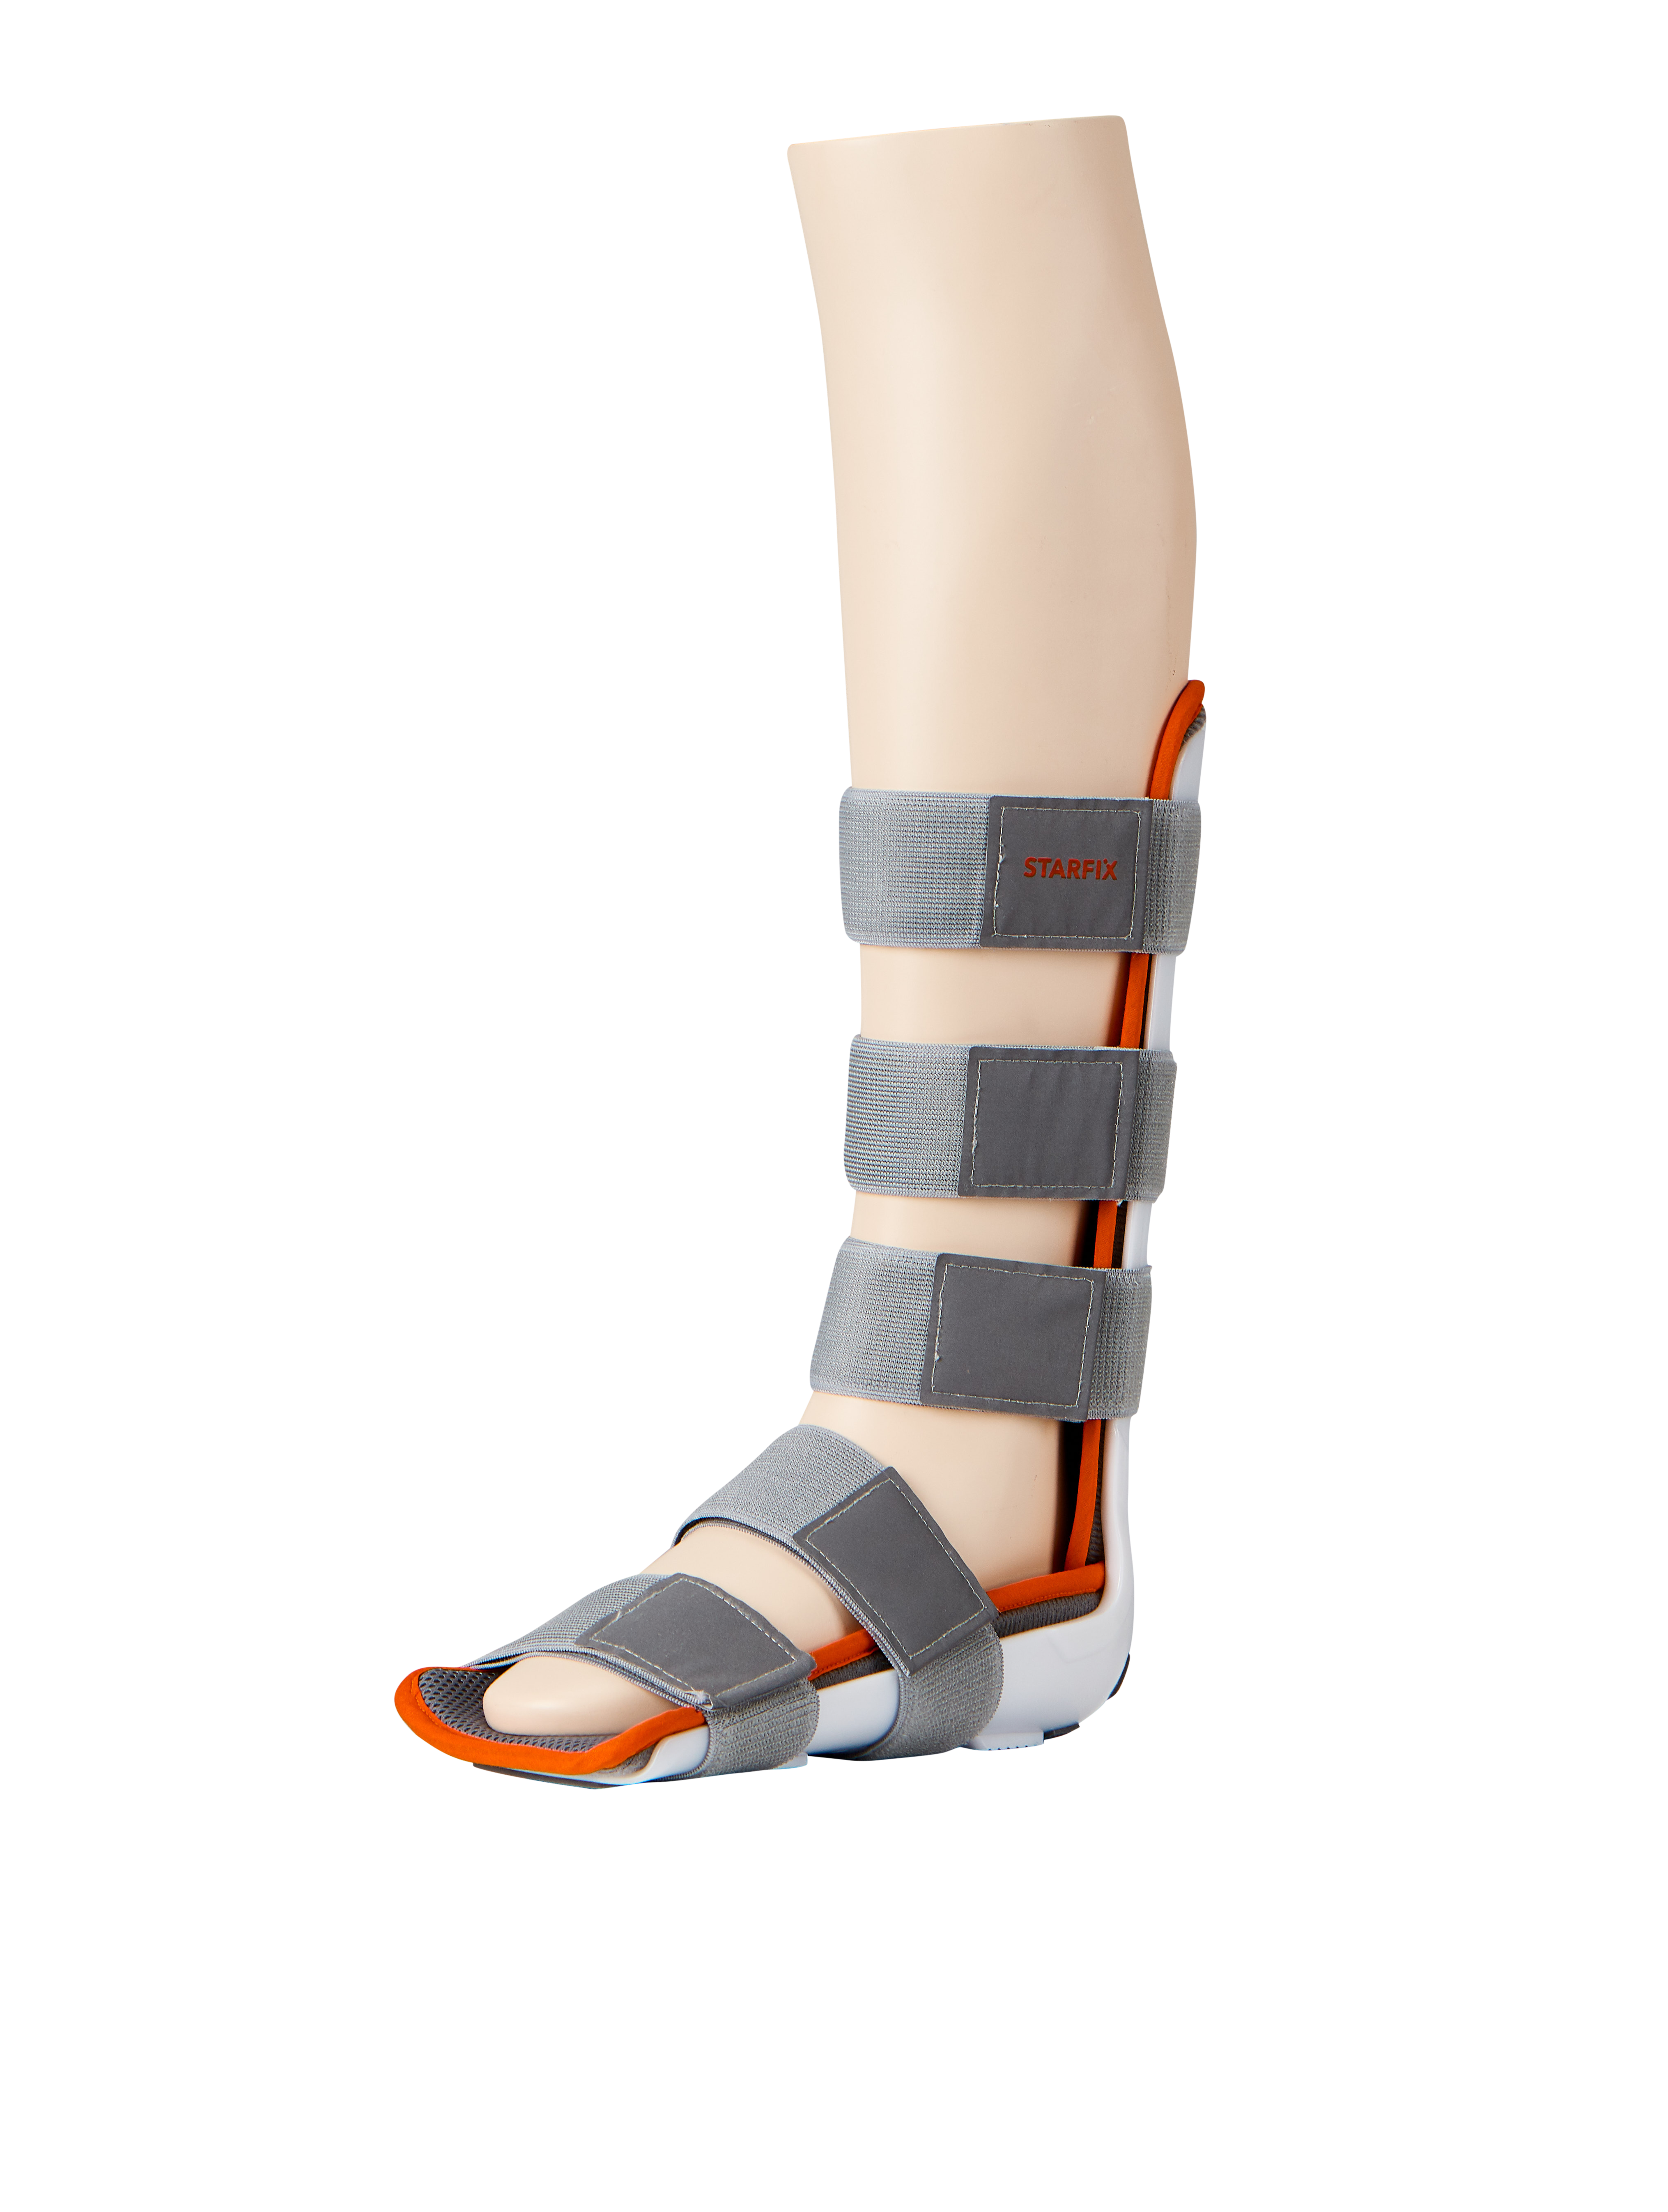 Orthopedic Splint_Starfix_Short Leg